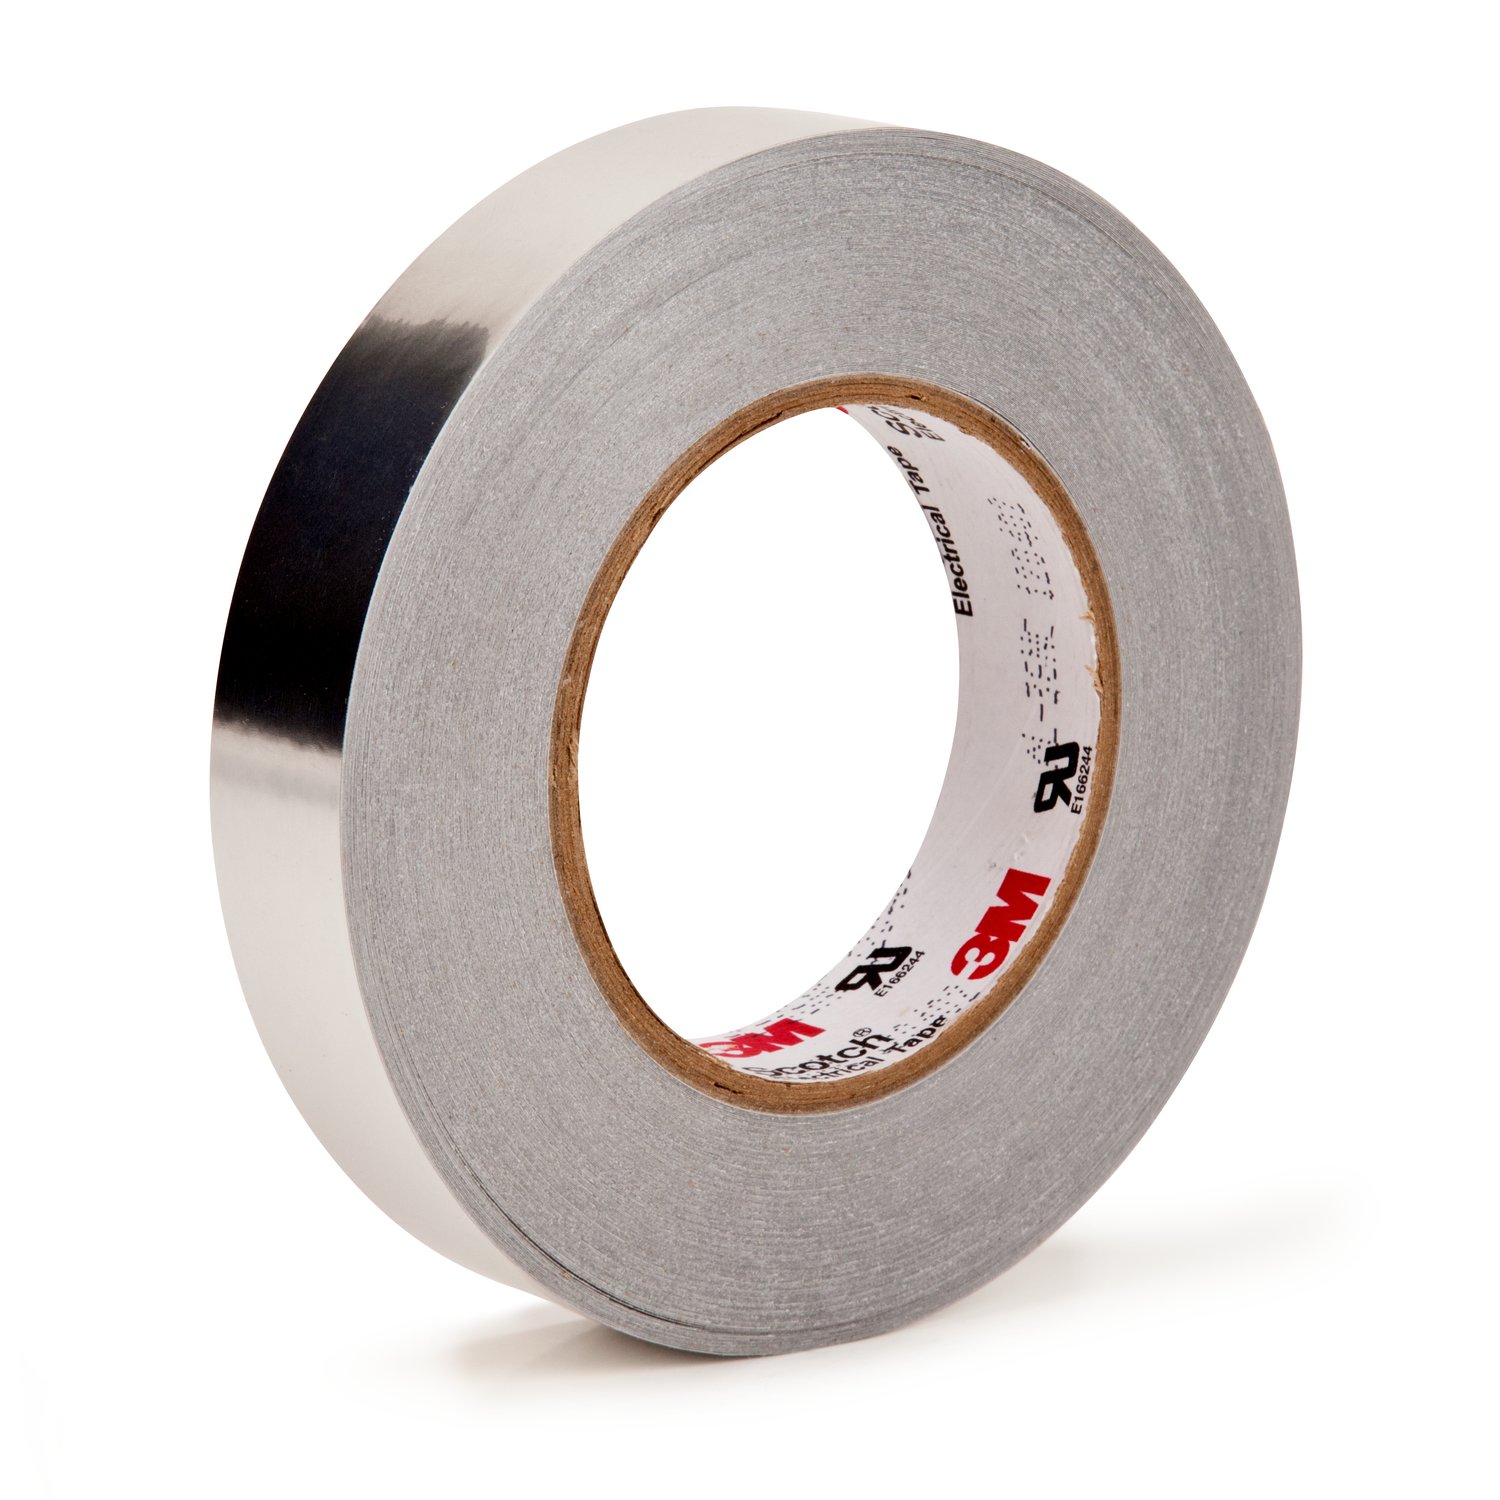 7010349611 - 3M Laminated Aluminum Foil EMI Shielding Tape AL-36NC, 6 in x 54-1/2
yds, 2 Rolls/Case